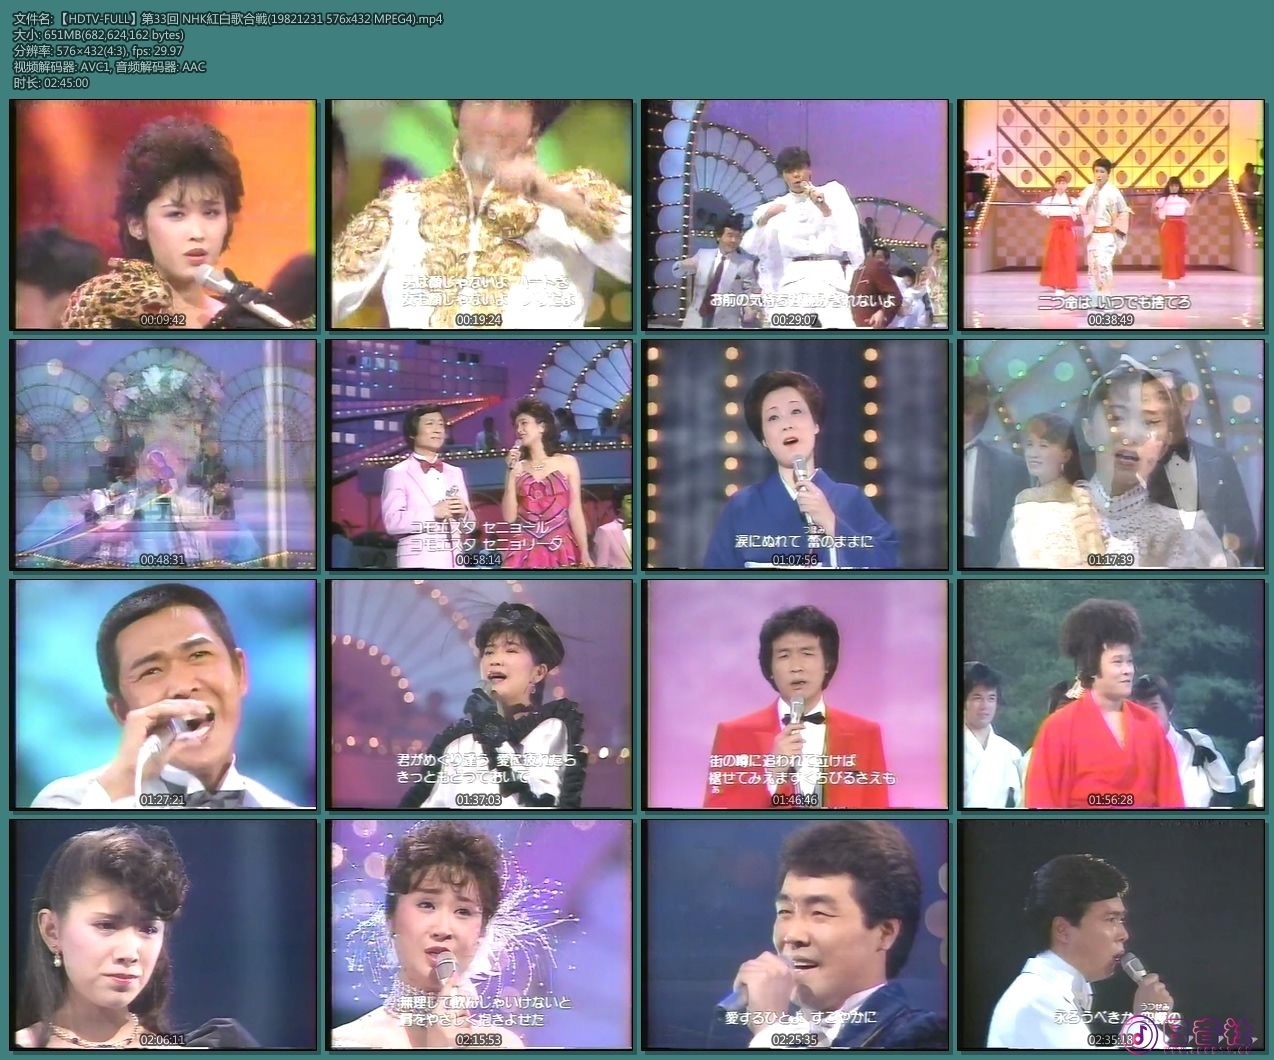 【HDTV-FULL】第33回 NHK紅白歌合戦(19821231 576x432 MPEG4).mp4.jpg